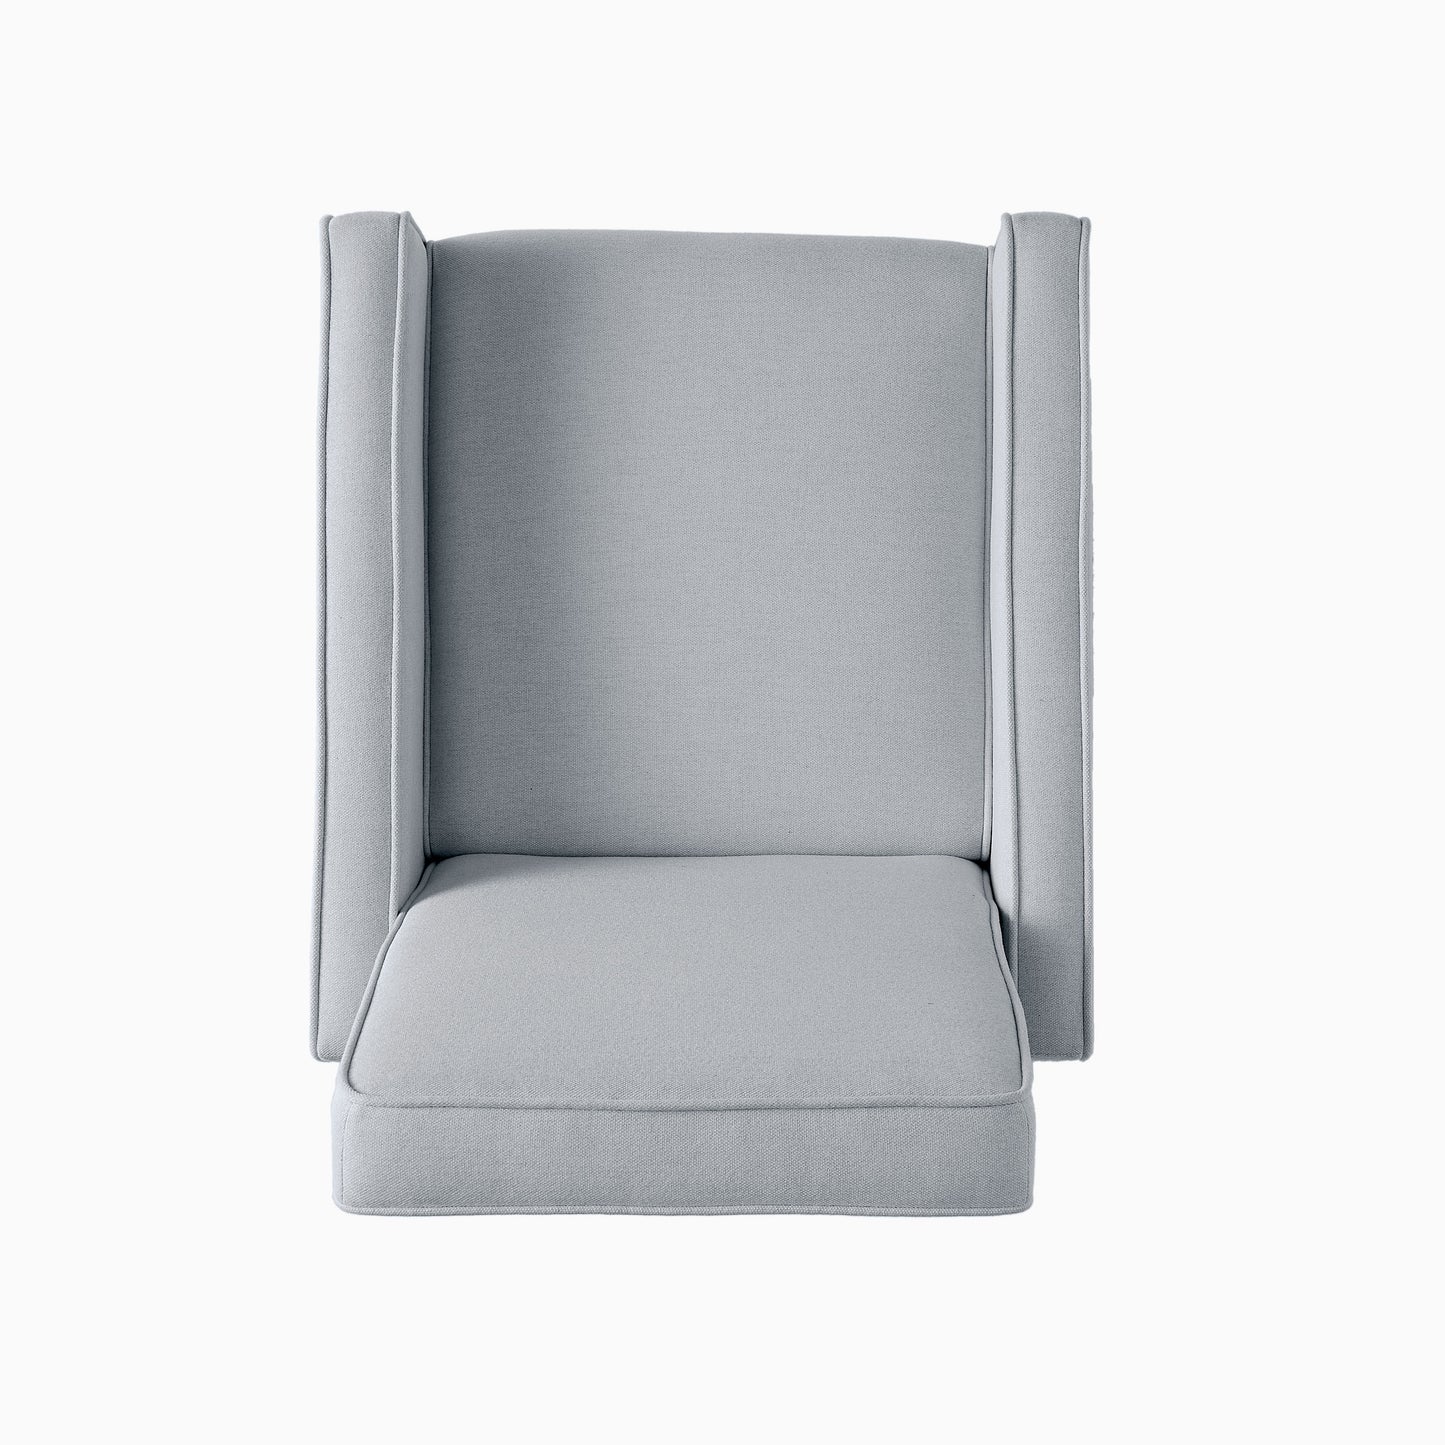 Olinda Minimalist Style Fabric Recliner Chair